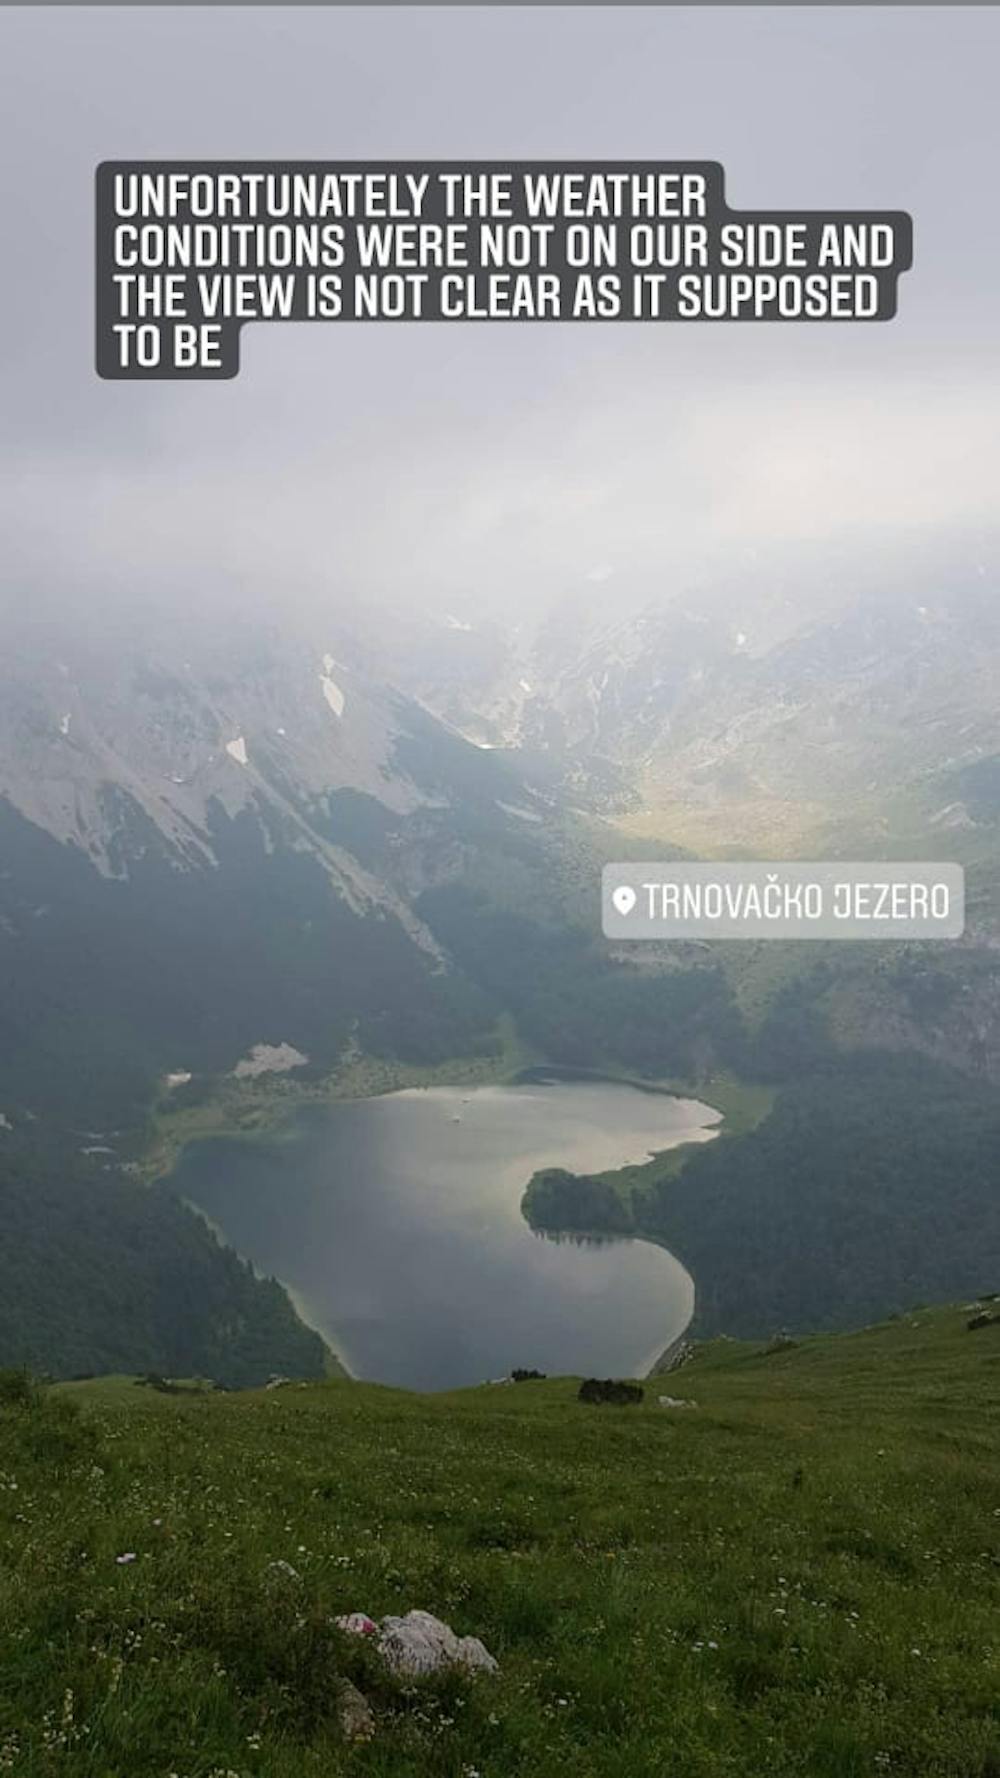 Photo from Maglic: Prijevor - Maglic - Trnovacko Jezero